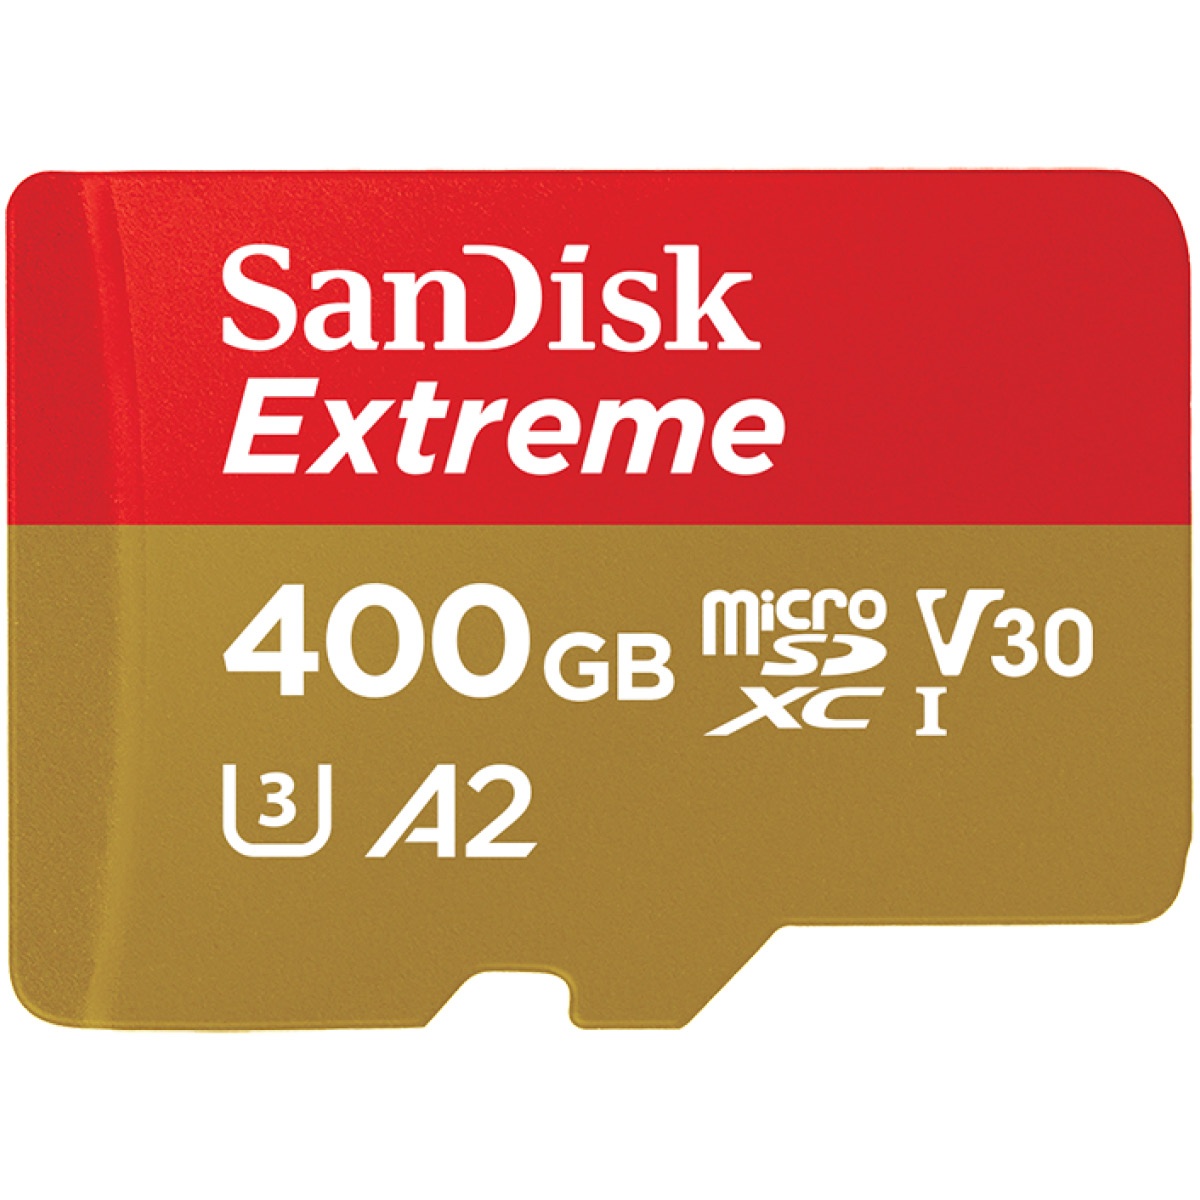 SanDisk Extreme MicroSDXC 400 GB 160 MB/s UHS-I